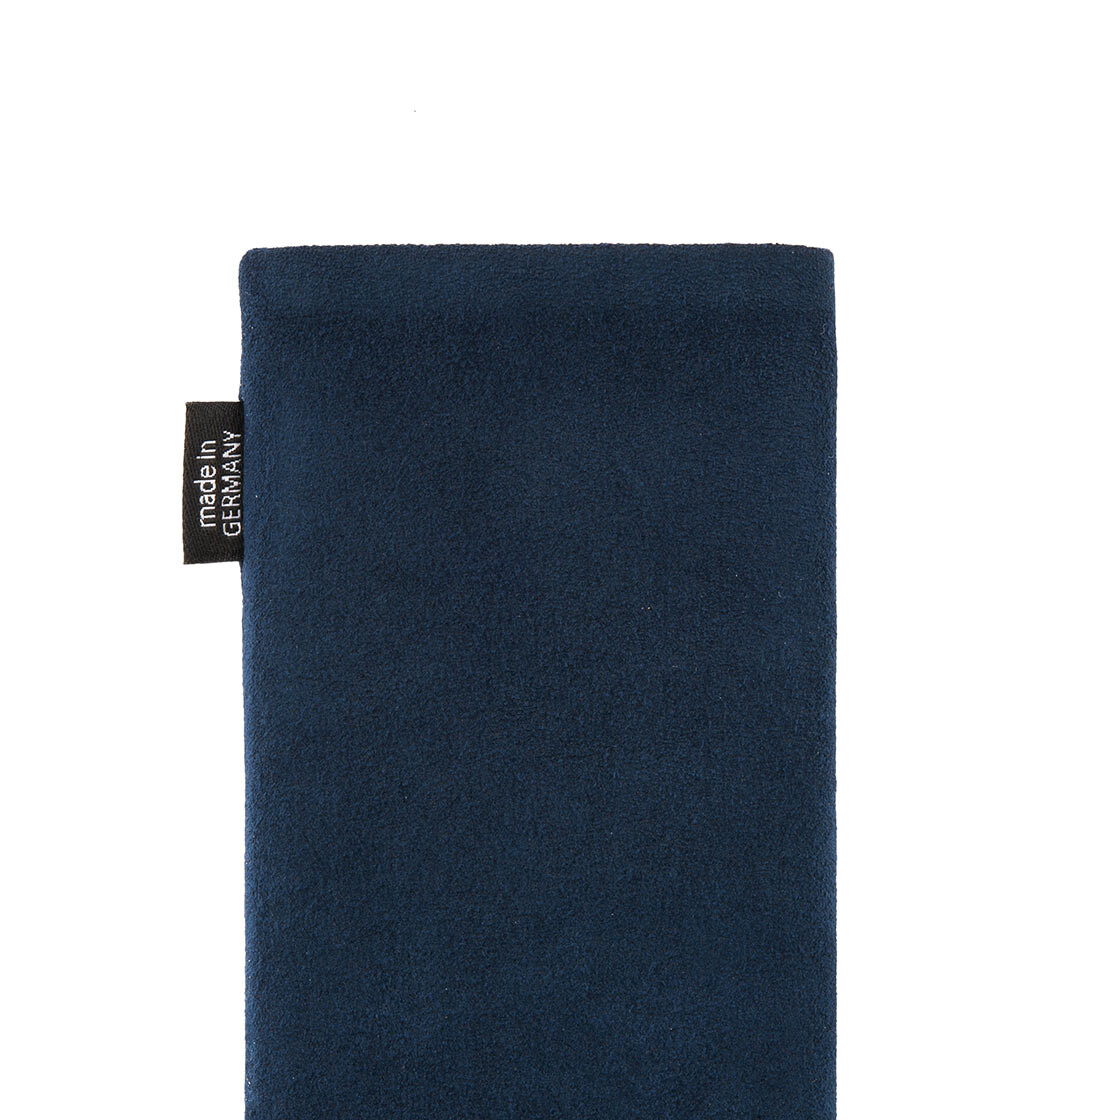 Alcantara® in blue - sleeve made of resistant Alcantara®, 21,90